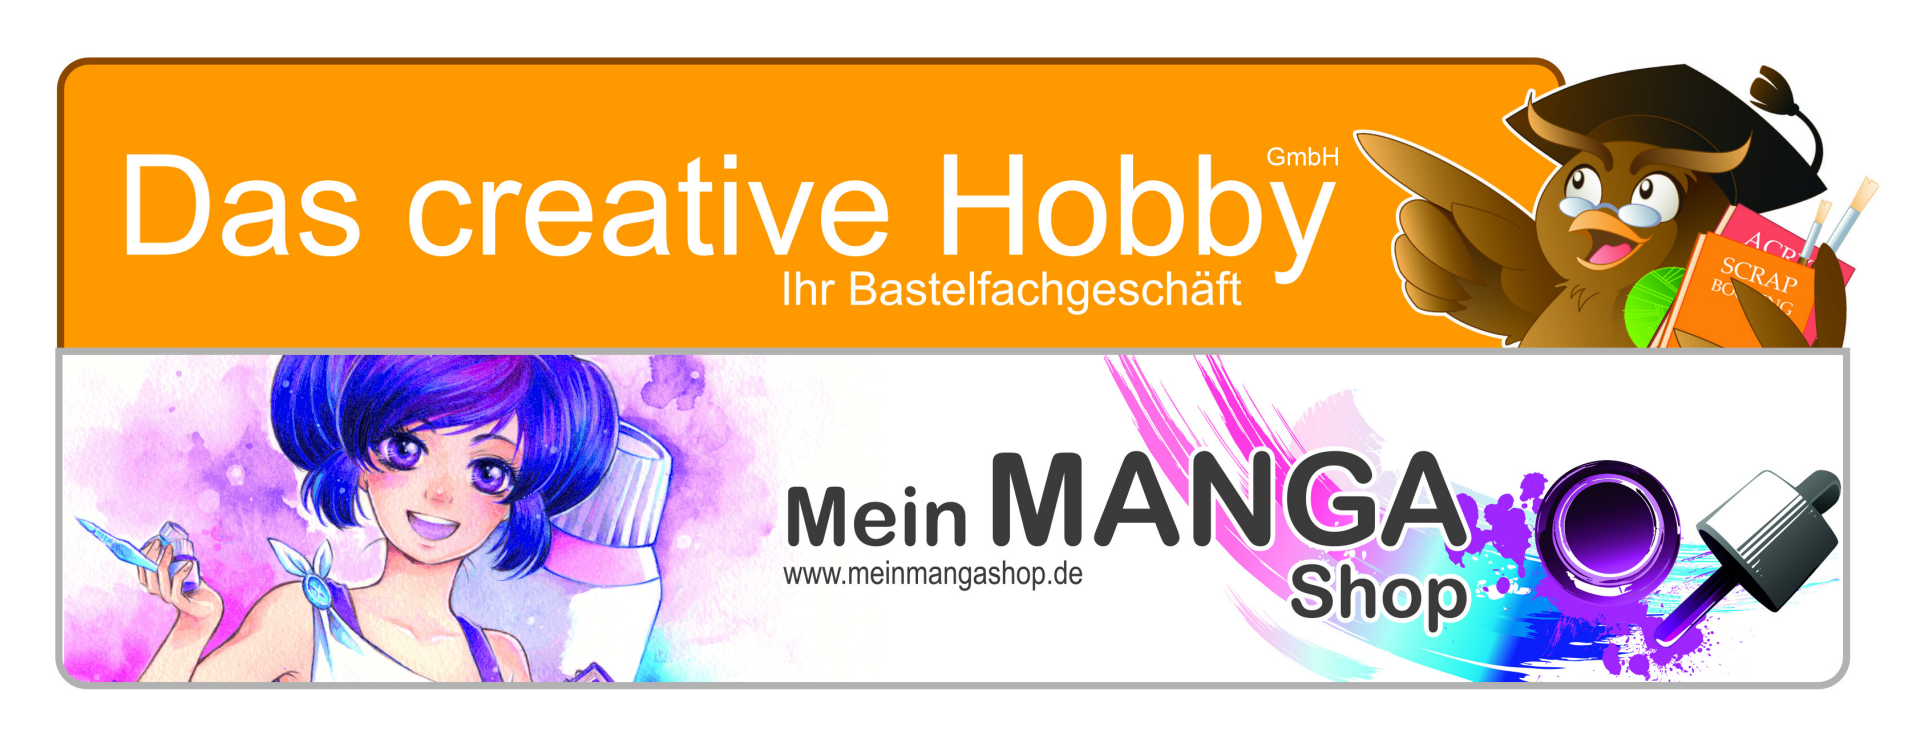 Das creative Hobby GmbH
Meinmangashop.de